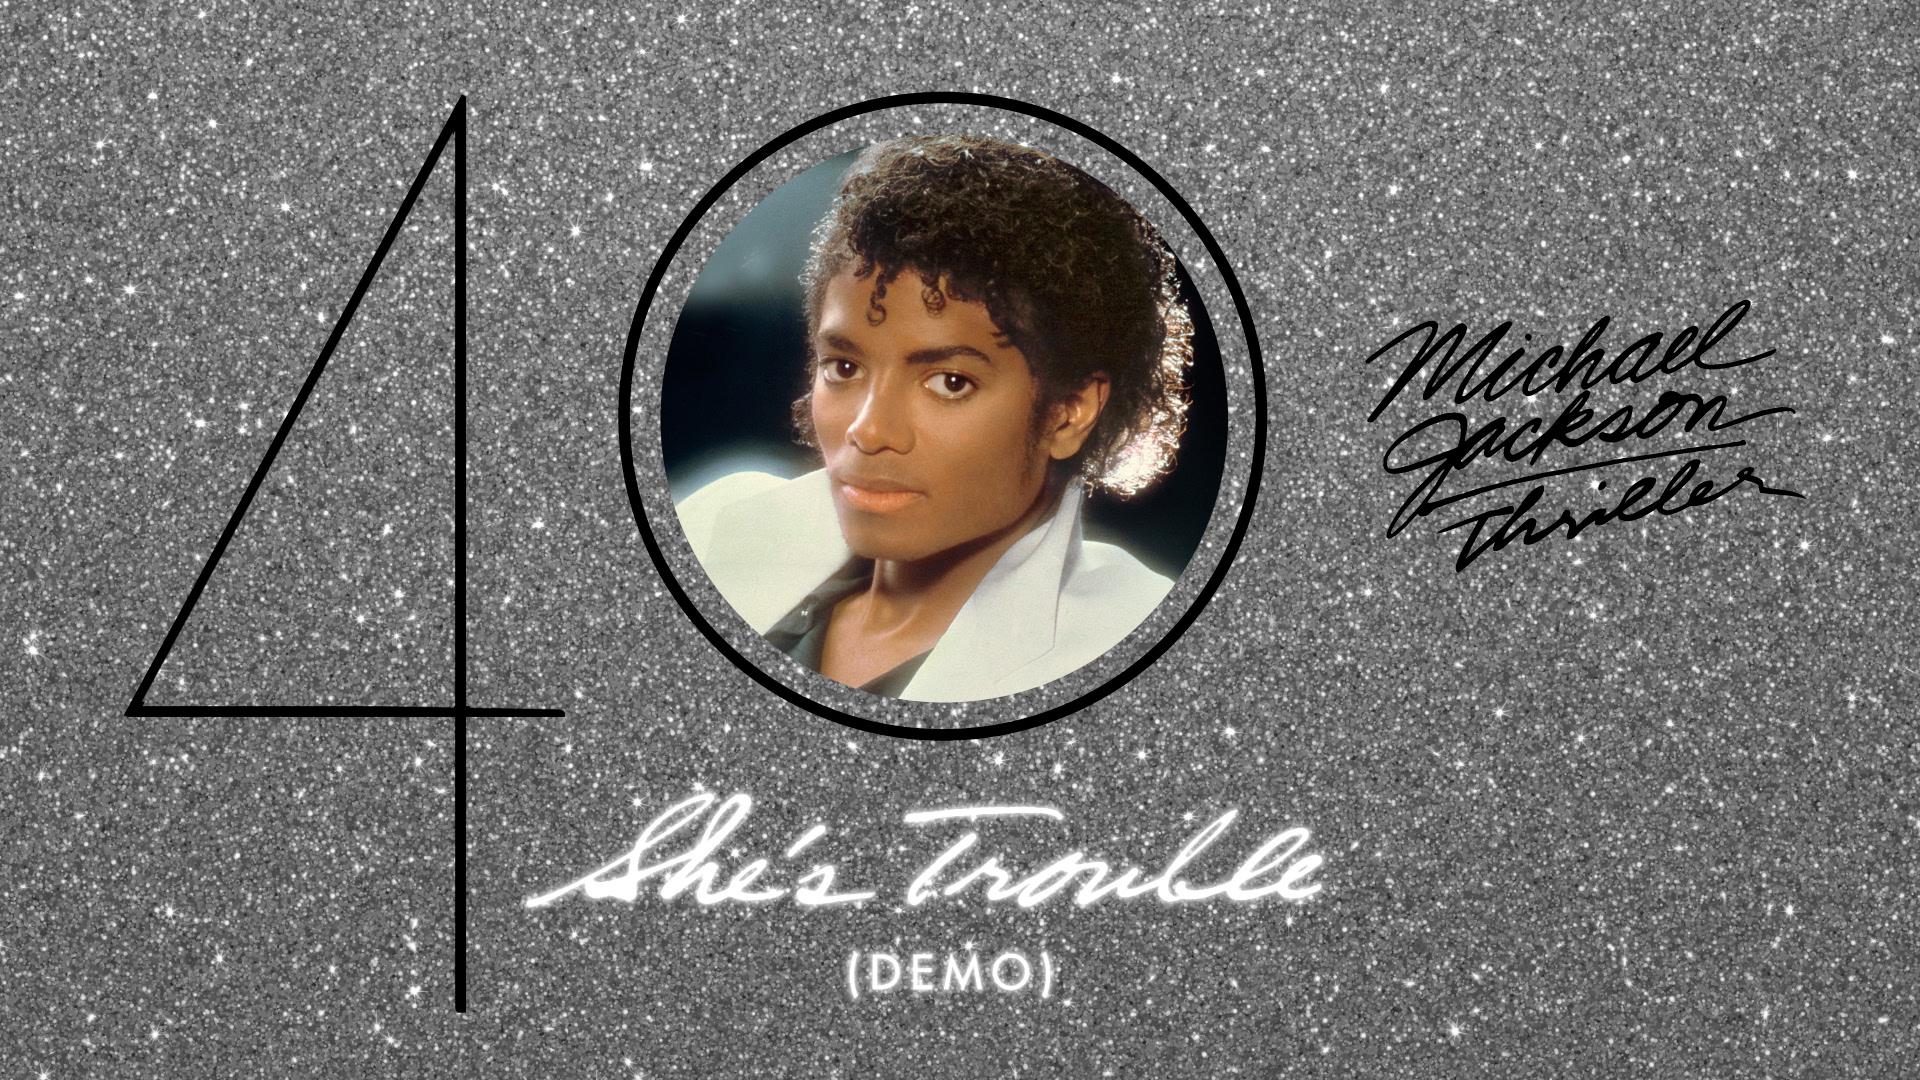 Michael Jackson - She's Trouble (Demo - Official Audio)